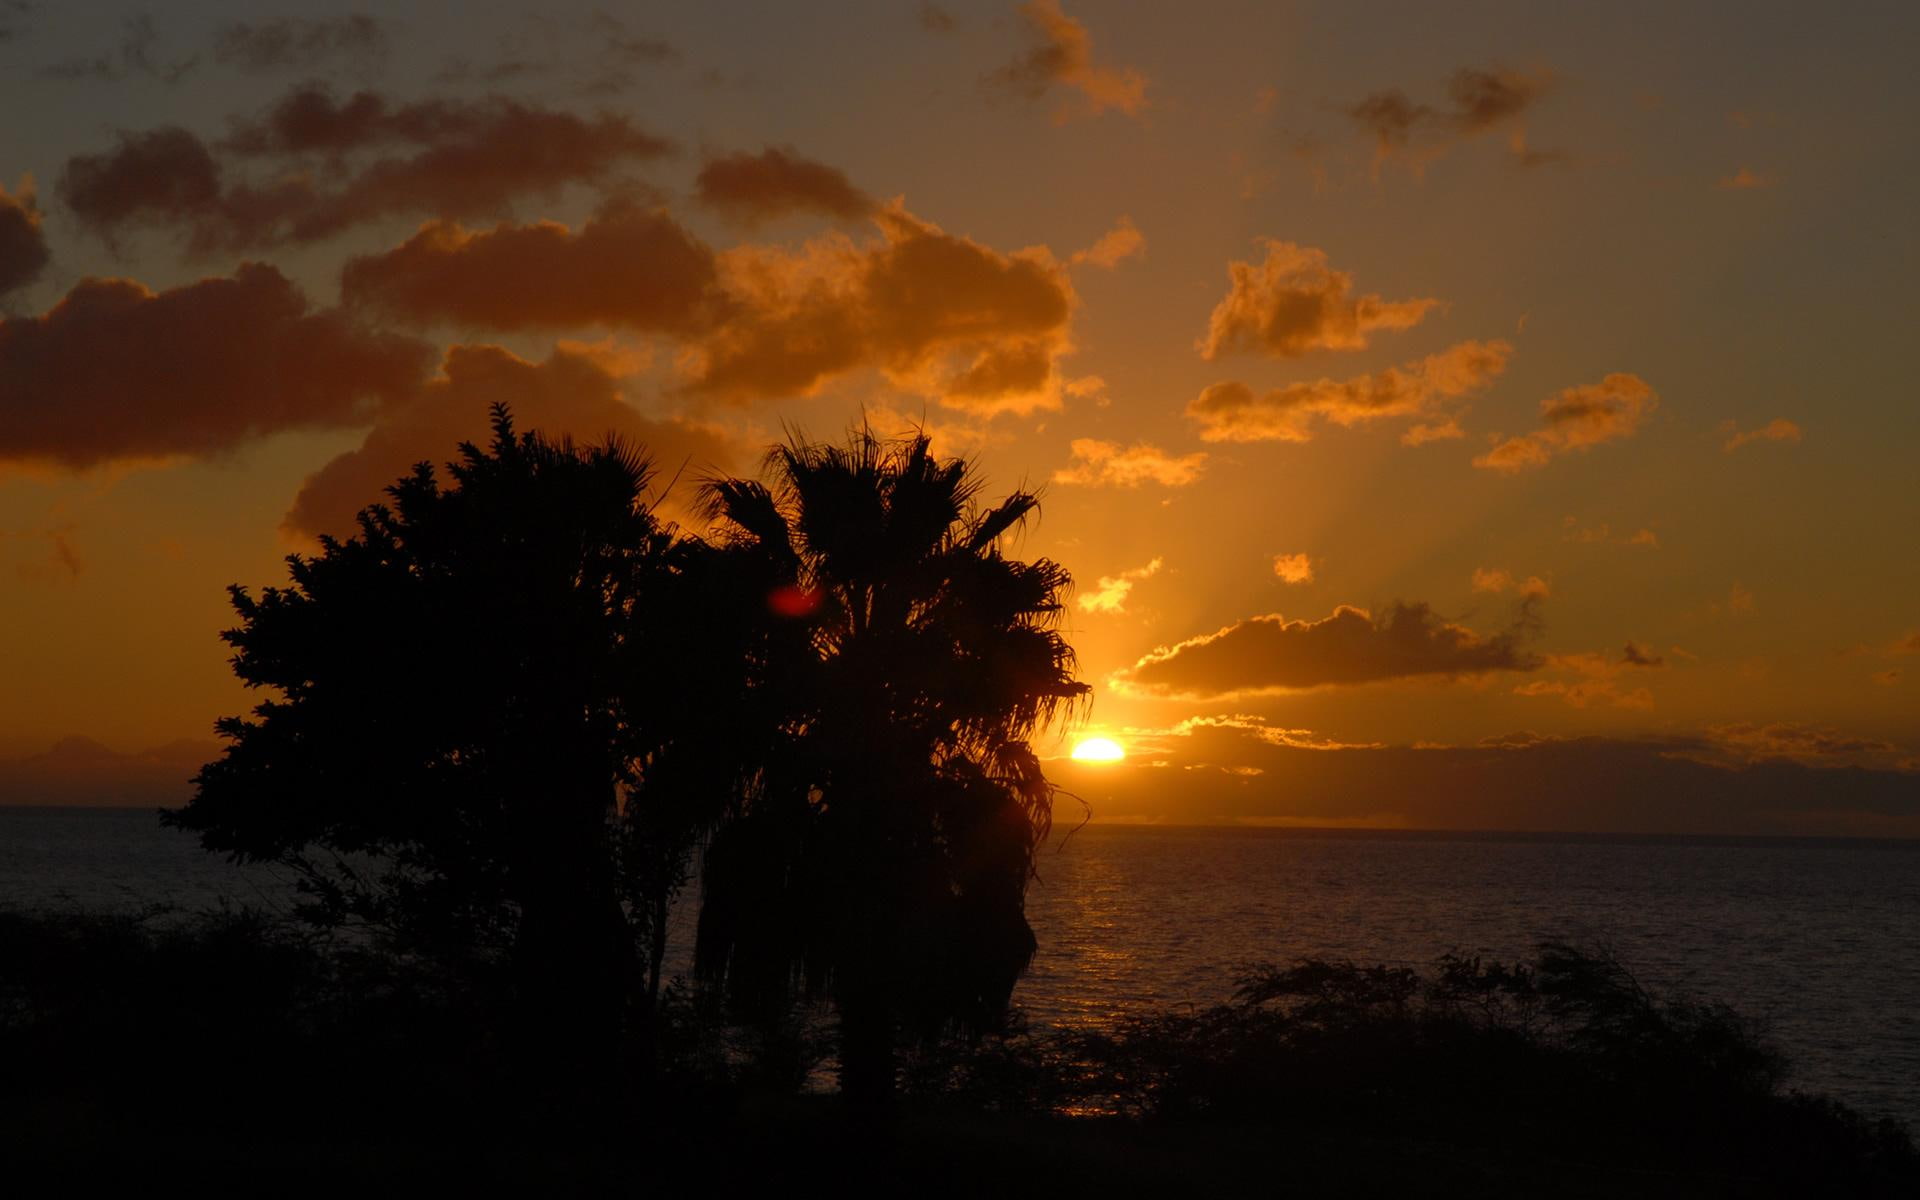 Amazing Sunset Image, palm trees, tropical, ocean, skies, sunrise